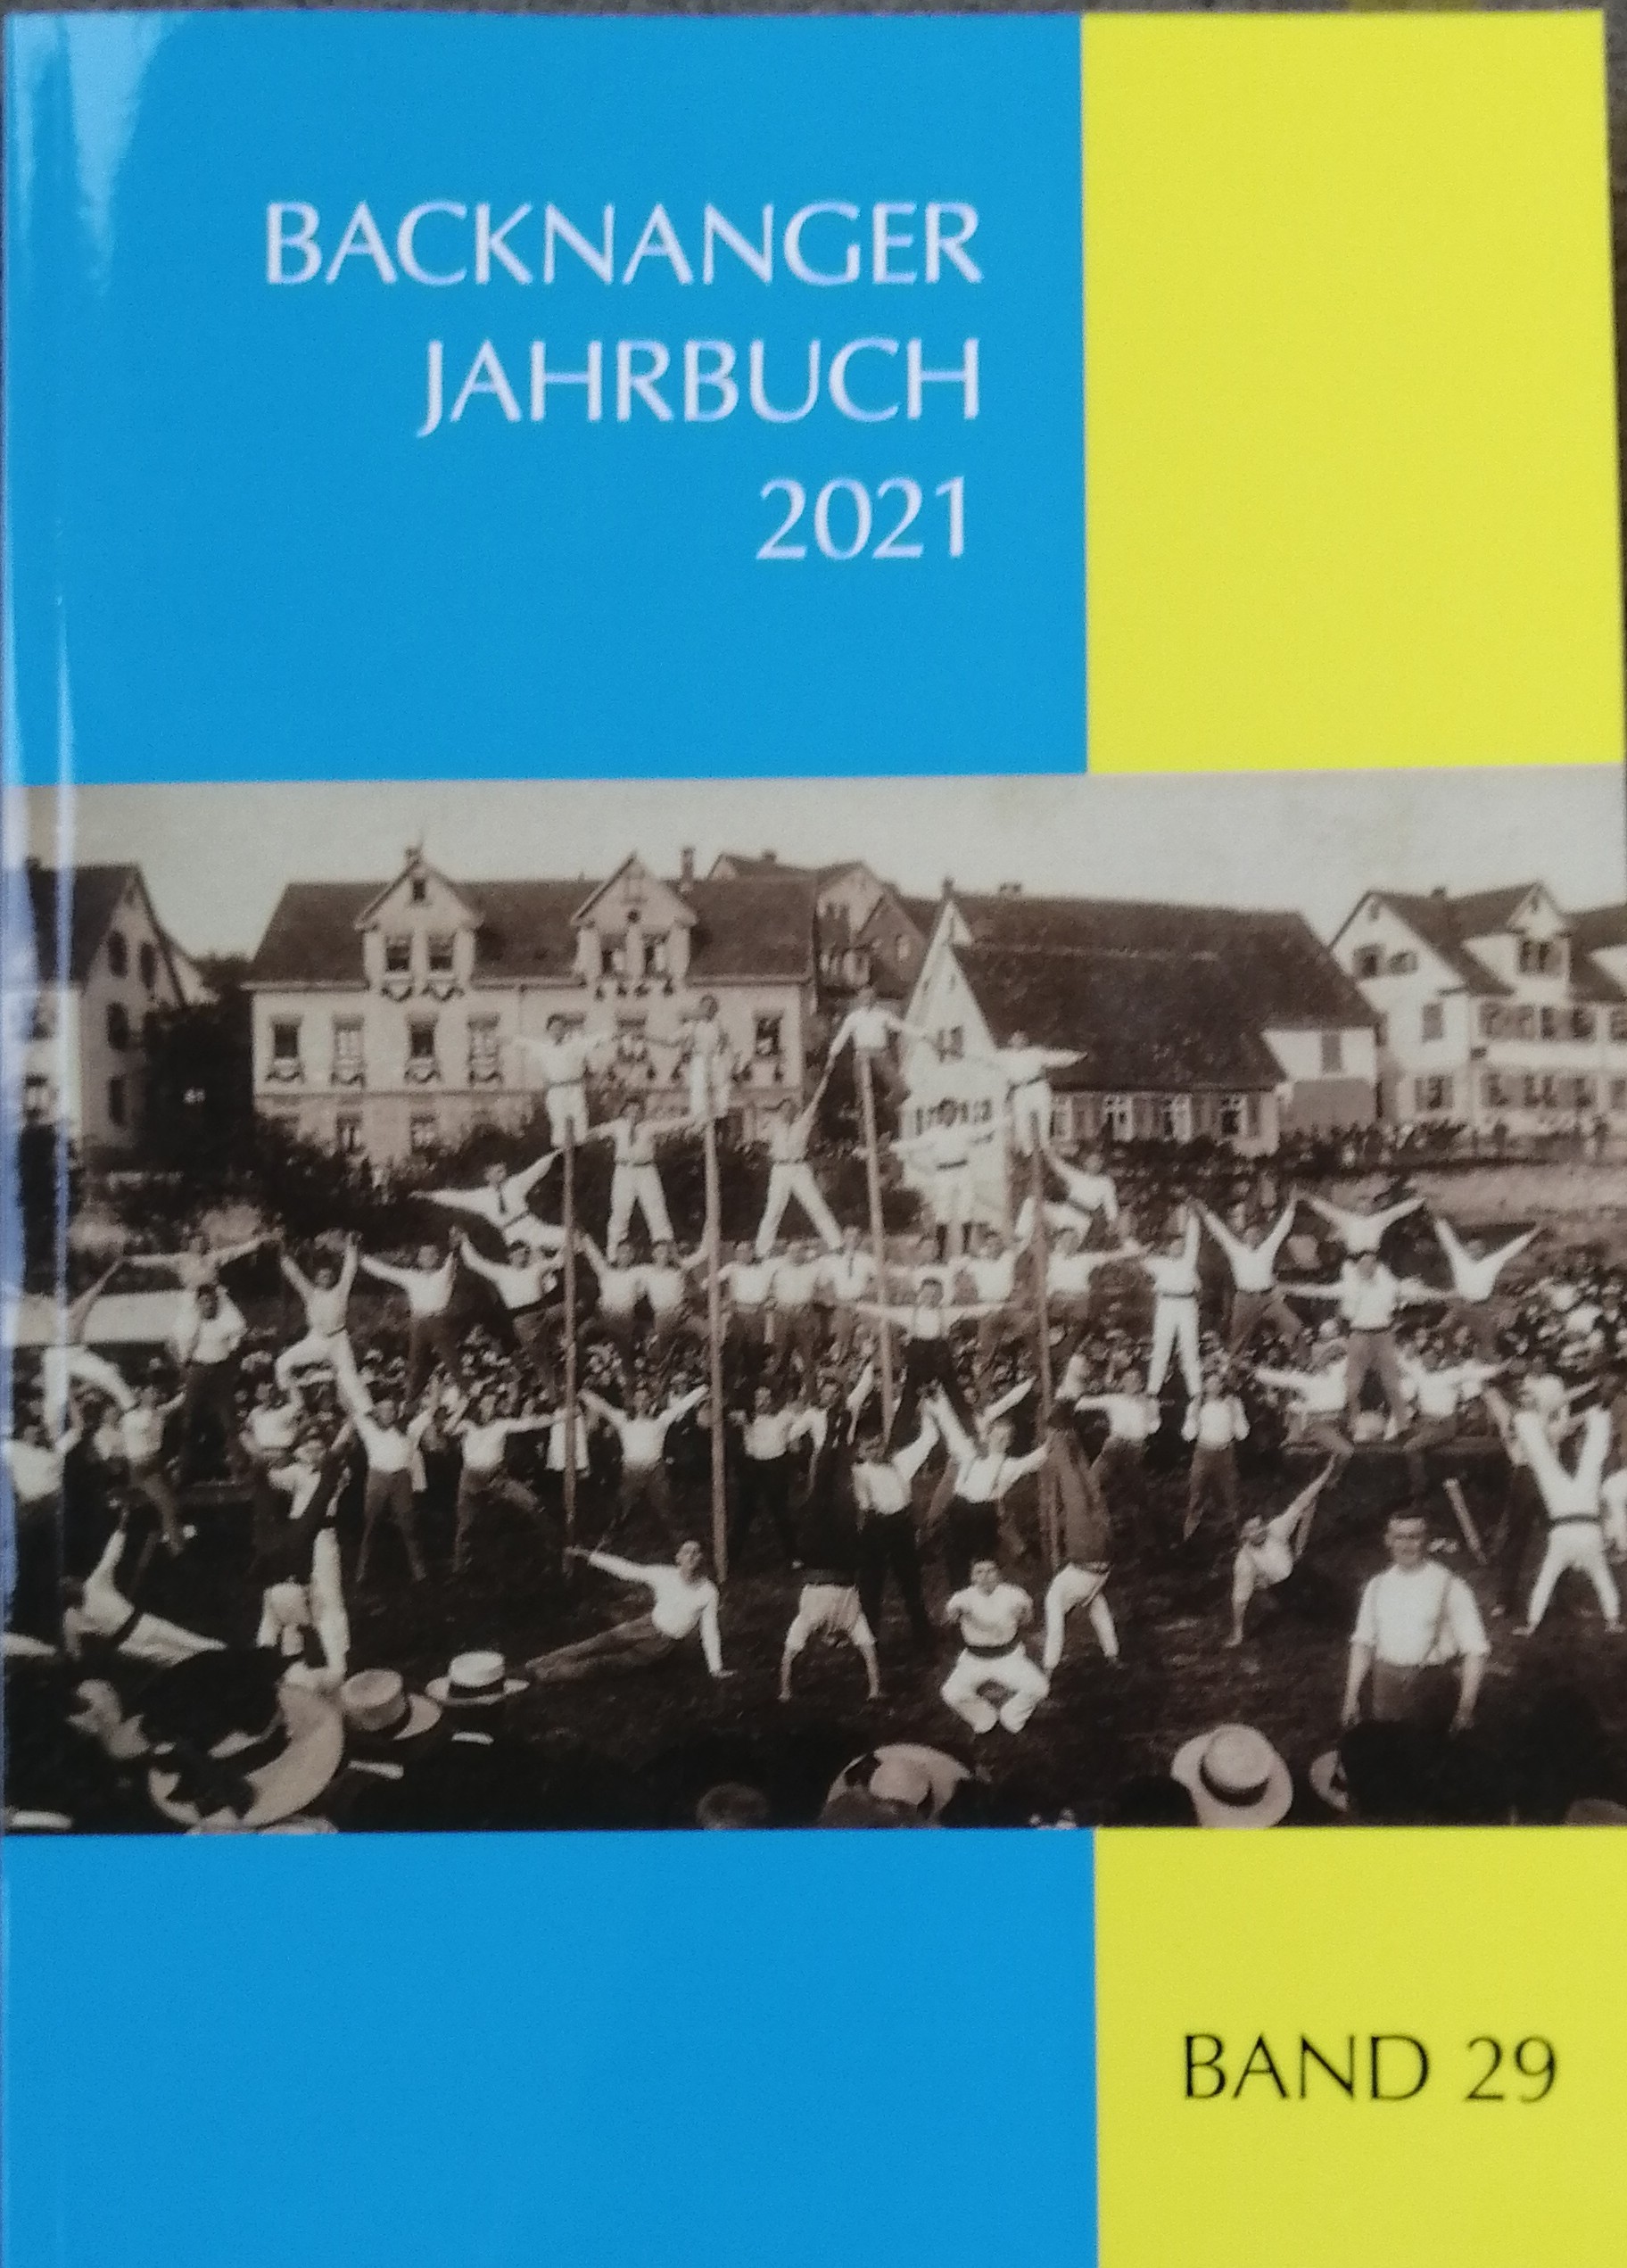 Backnanger Jahrbuch Band 29 - 2021